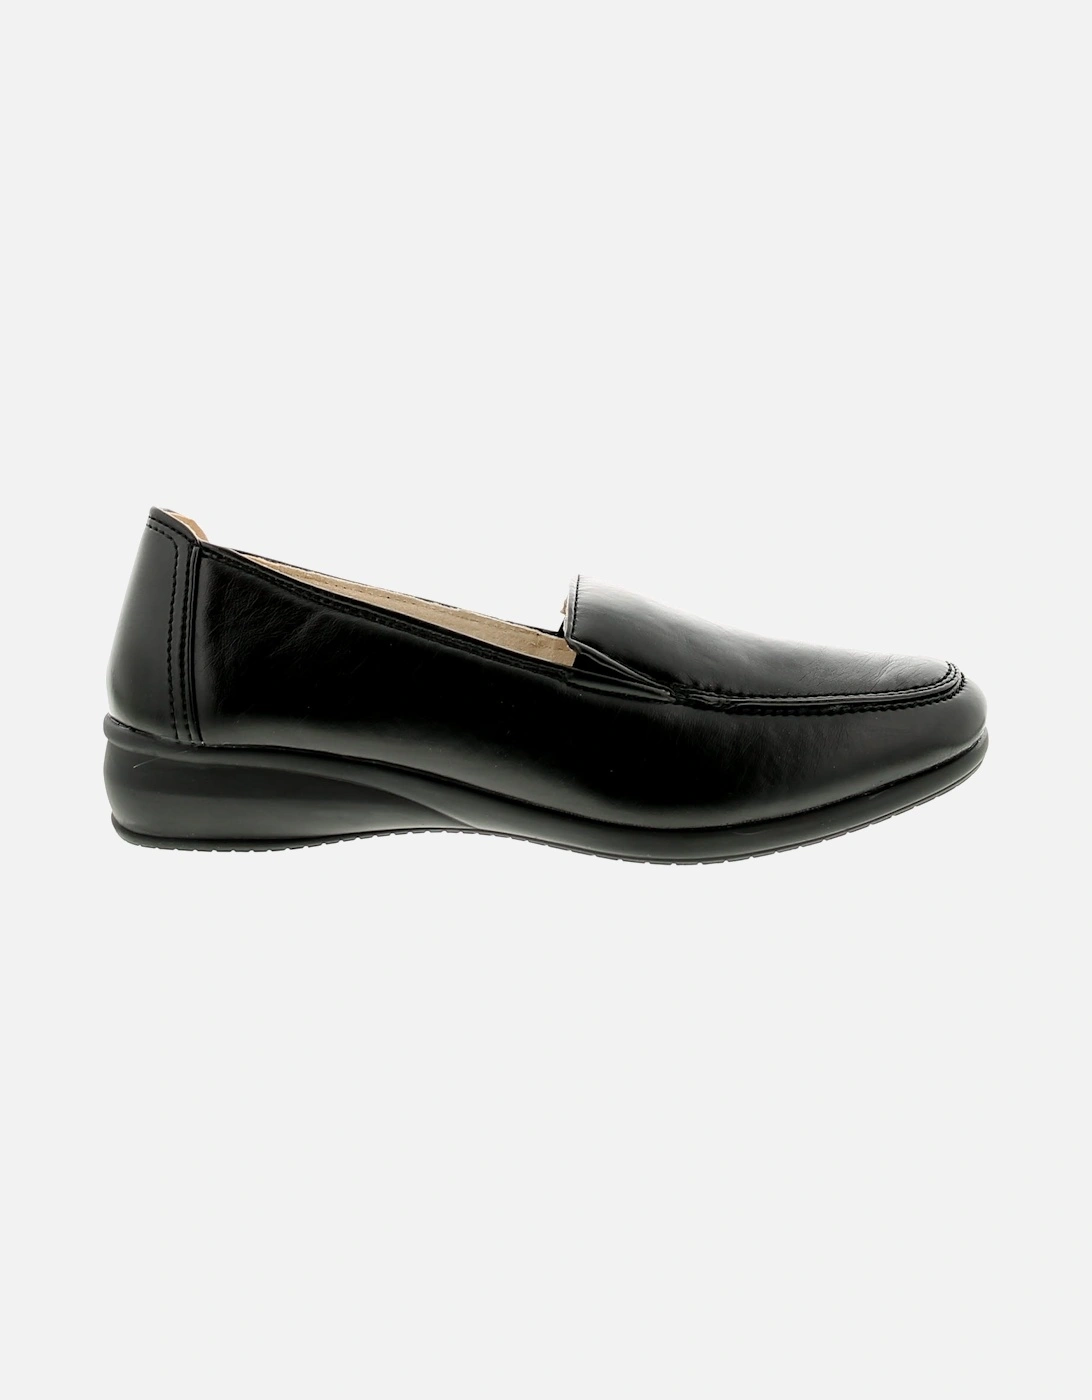 Womens Shoes Flat Sally Slip On black UK Size